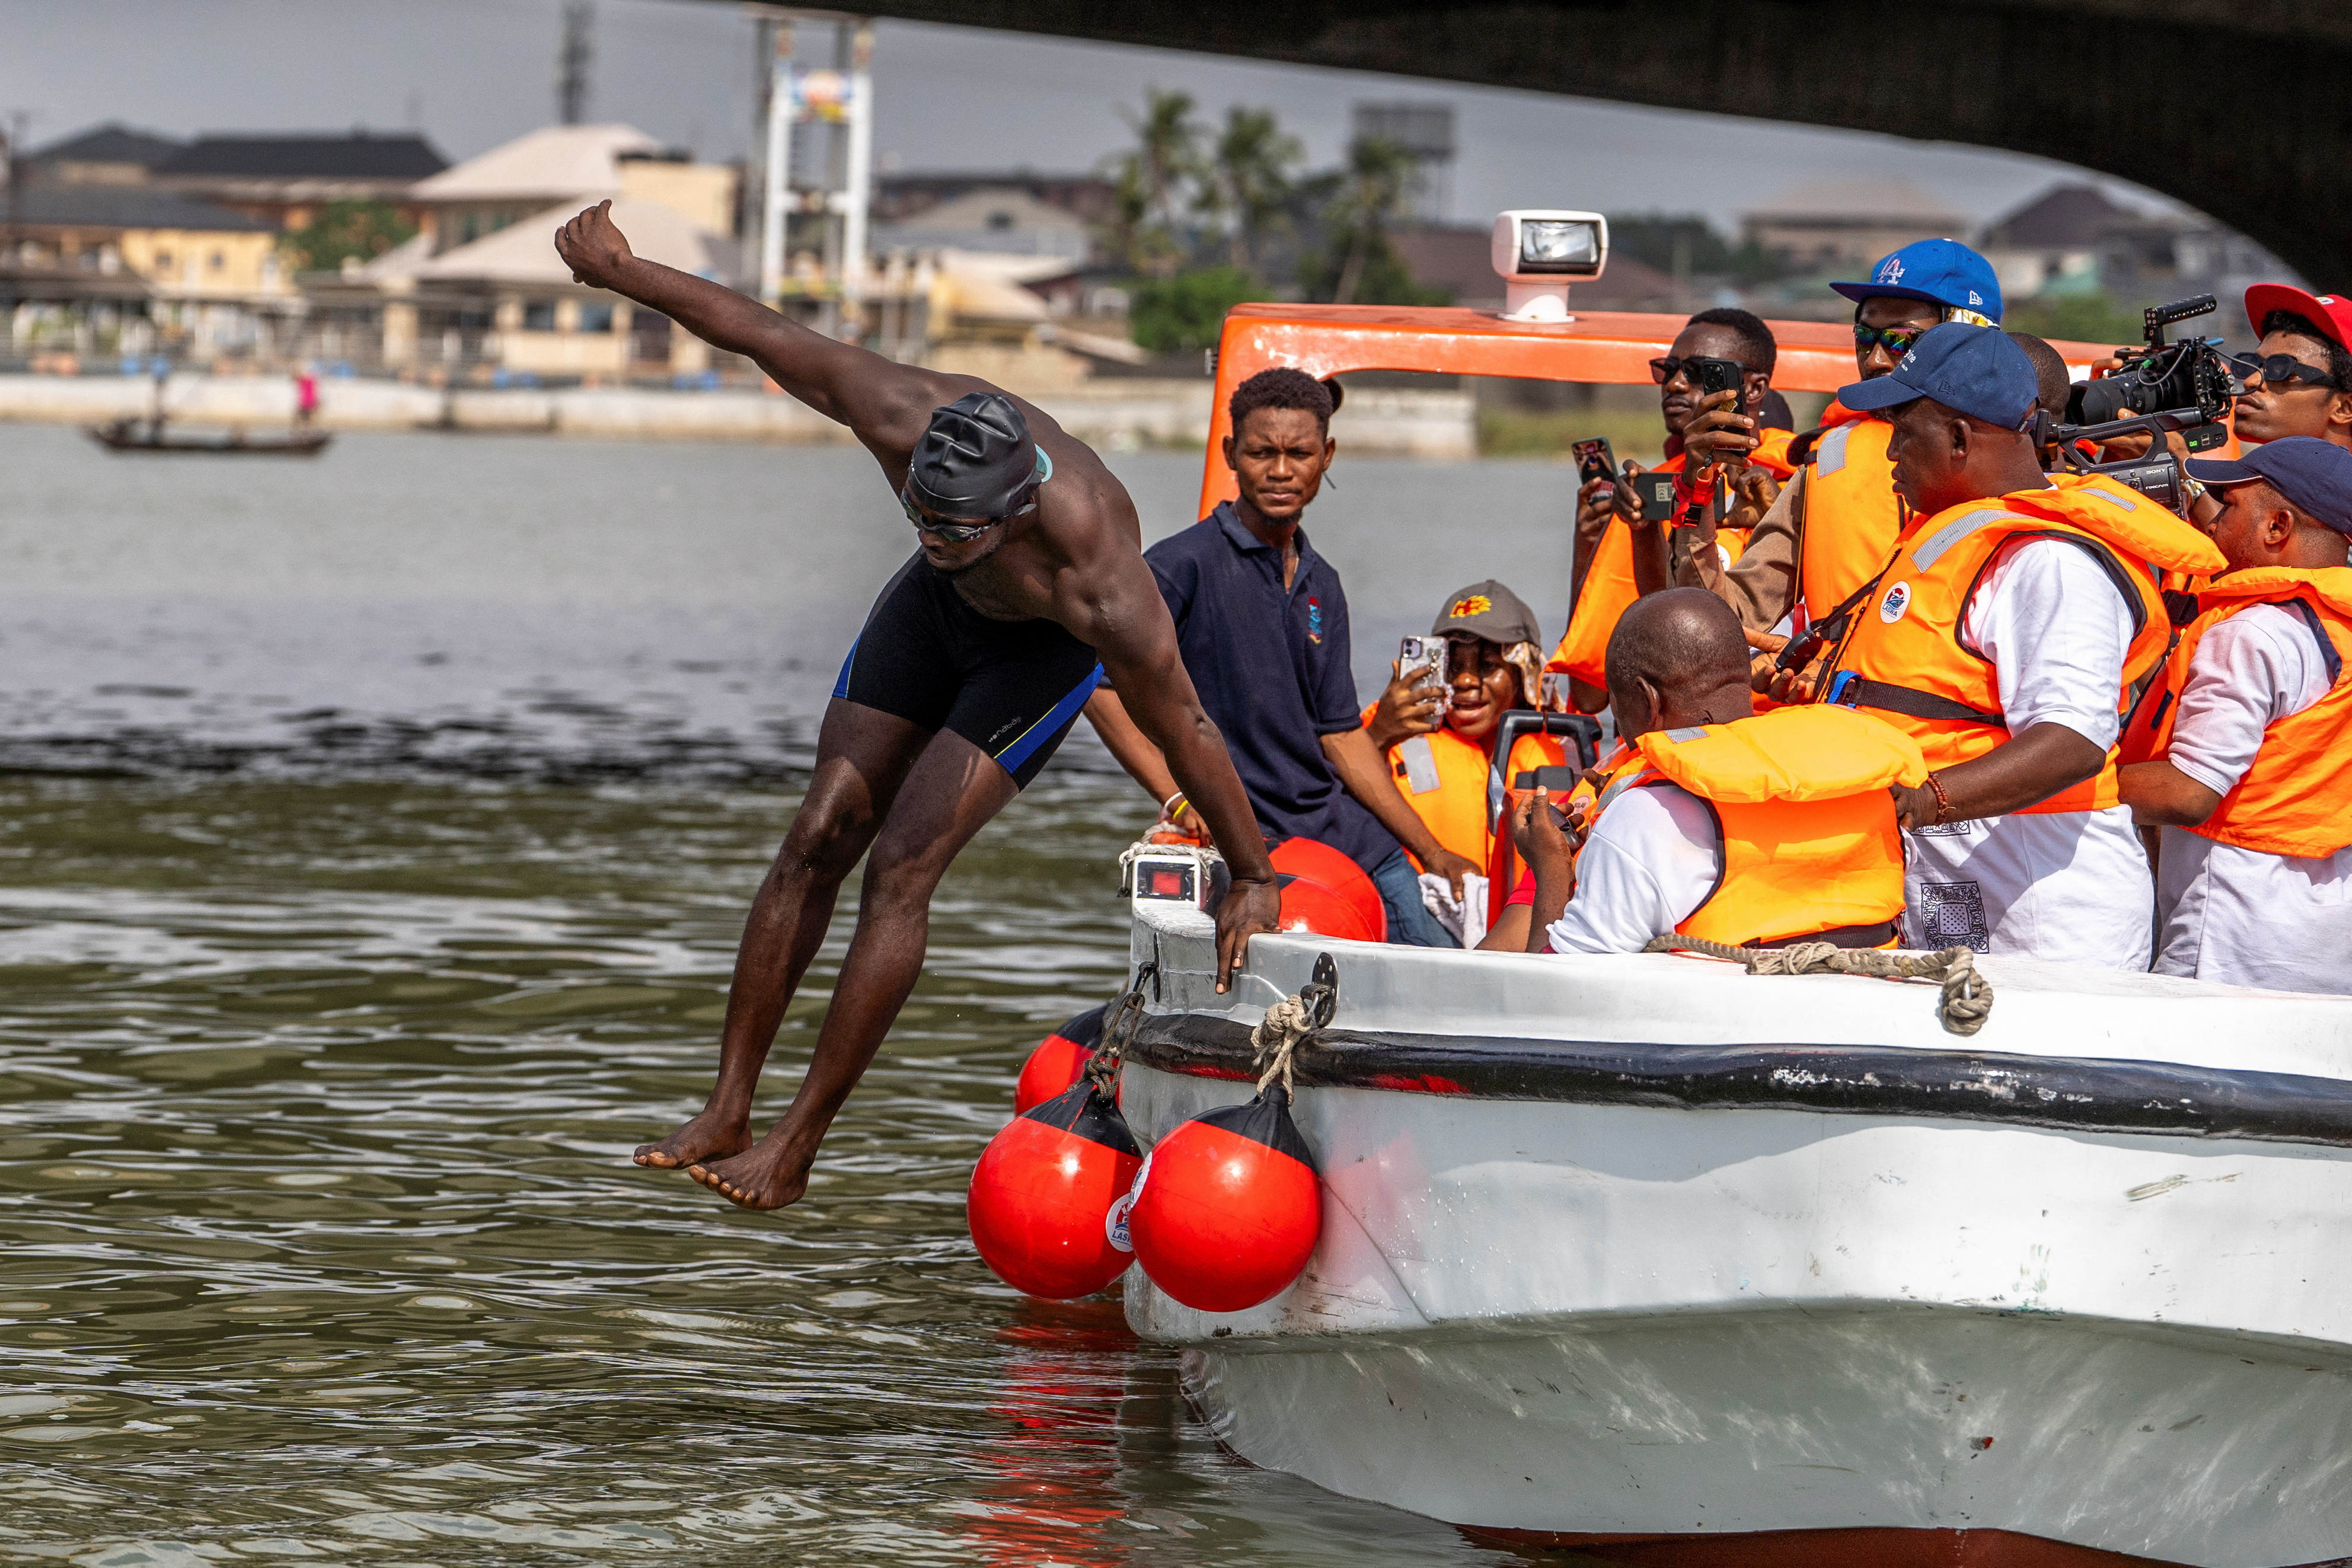 Nigeria swimmer takes on challenge to raise mental health awareness